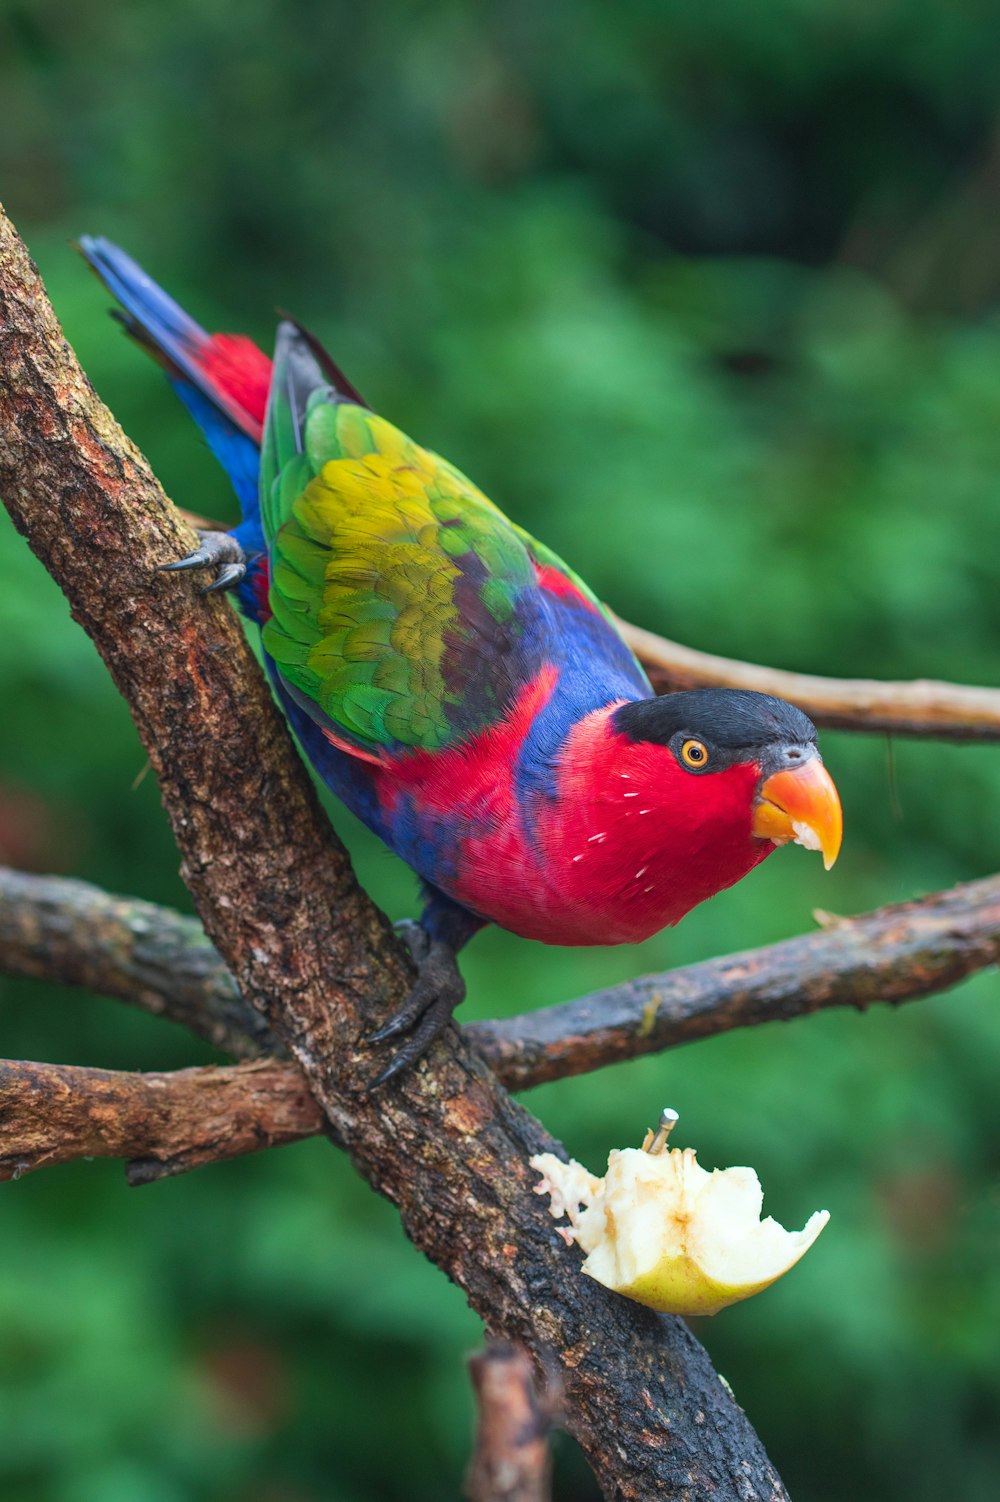 Thicken Slange smør Colorful Animals Pictures | Download Free Images on Unsplash